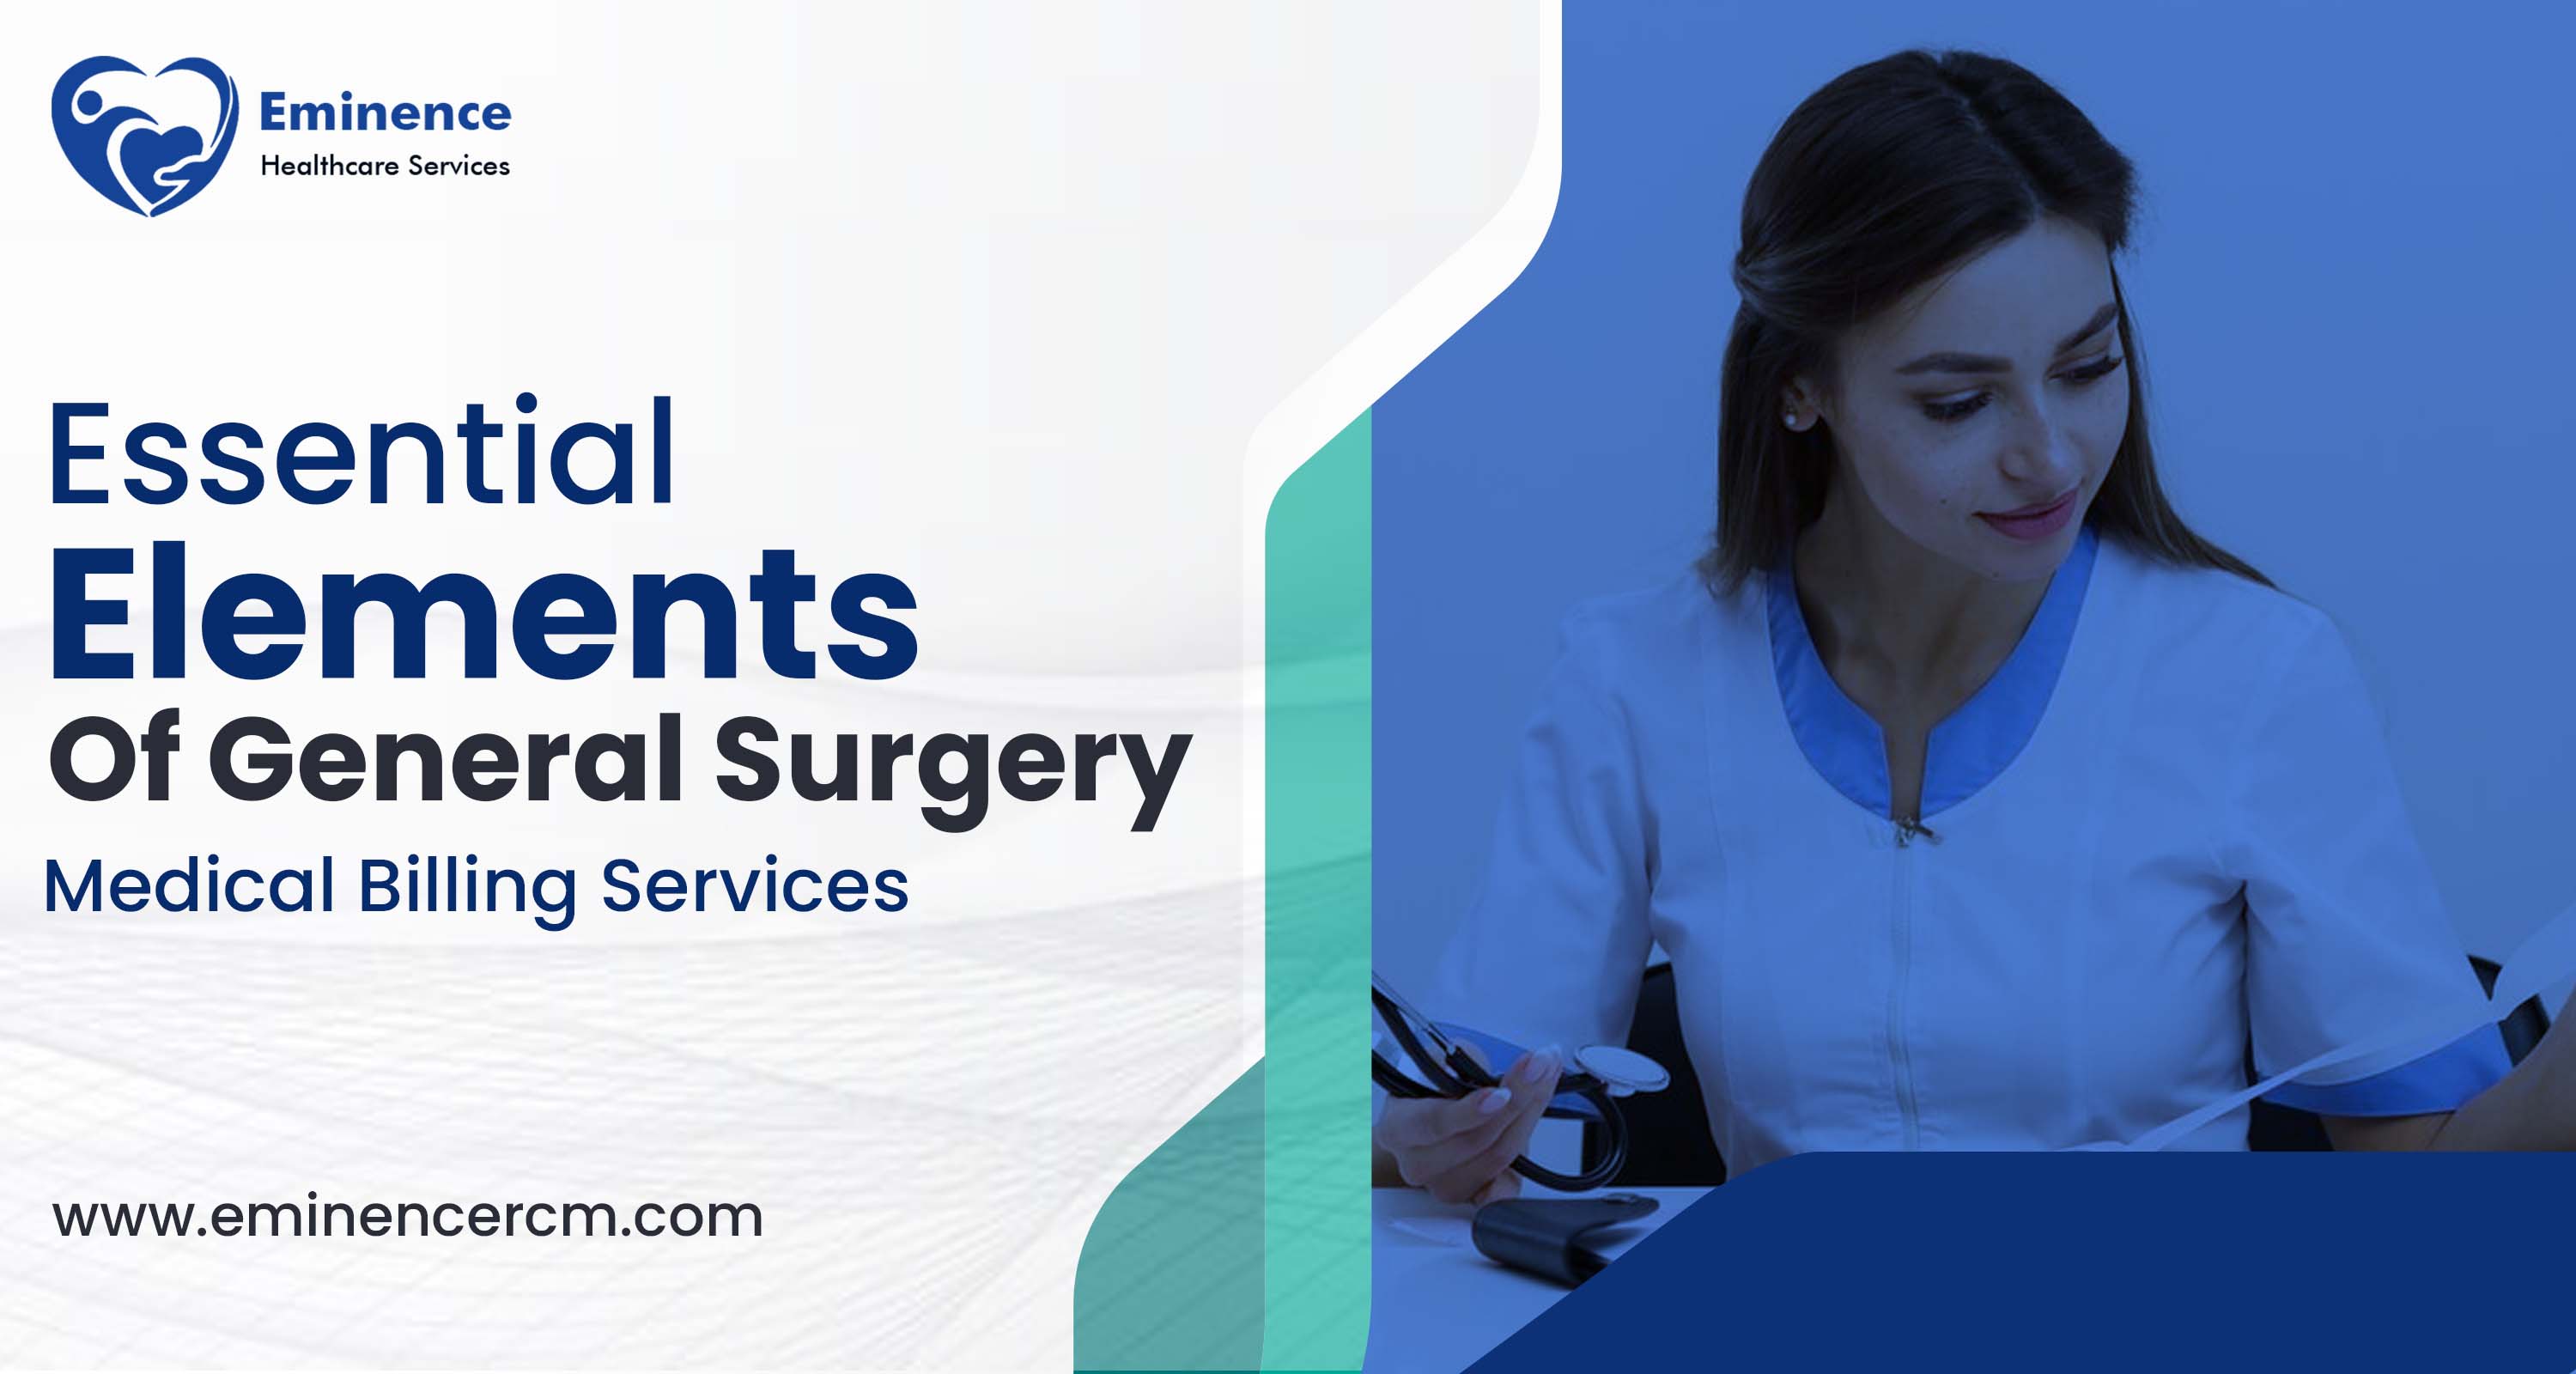 Medical Billing Services for General Surgery | Eminence RCM